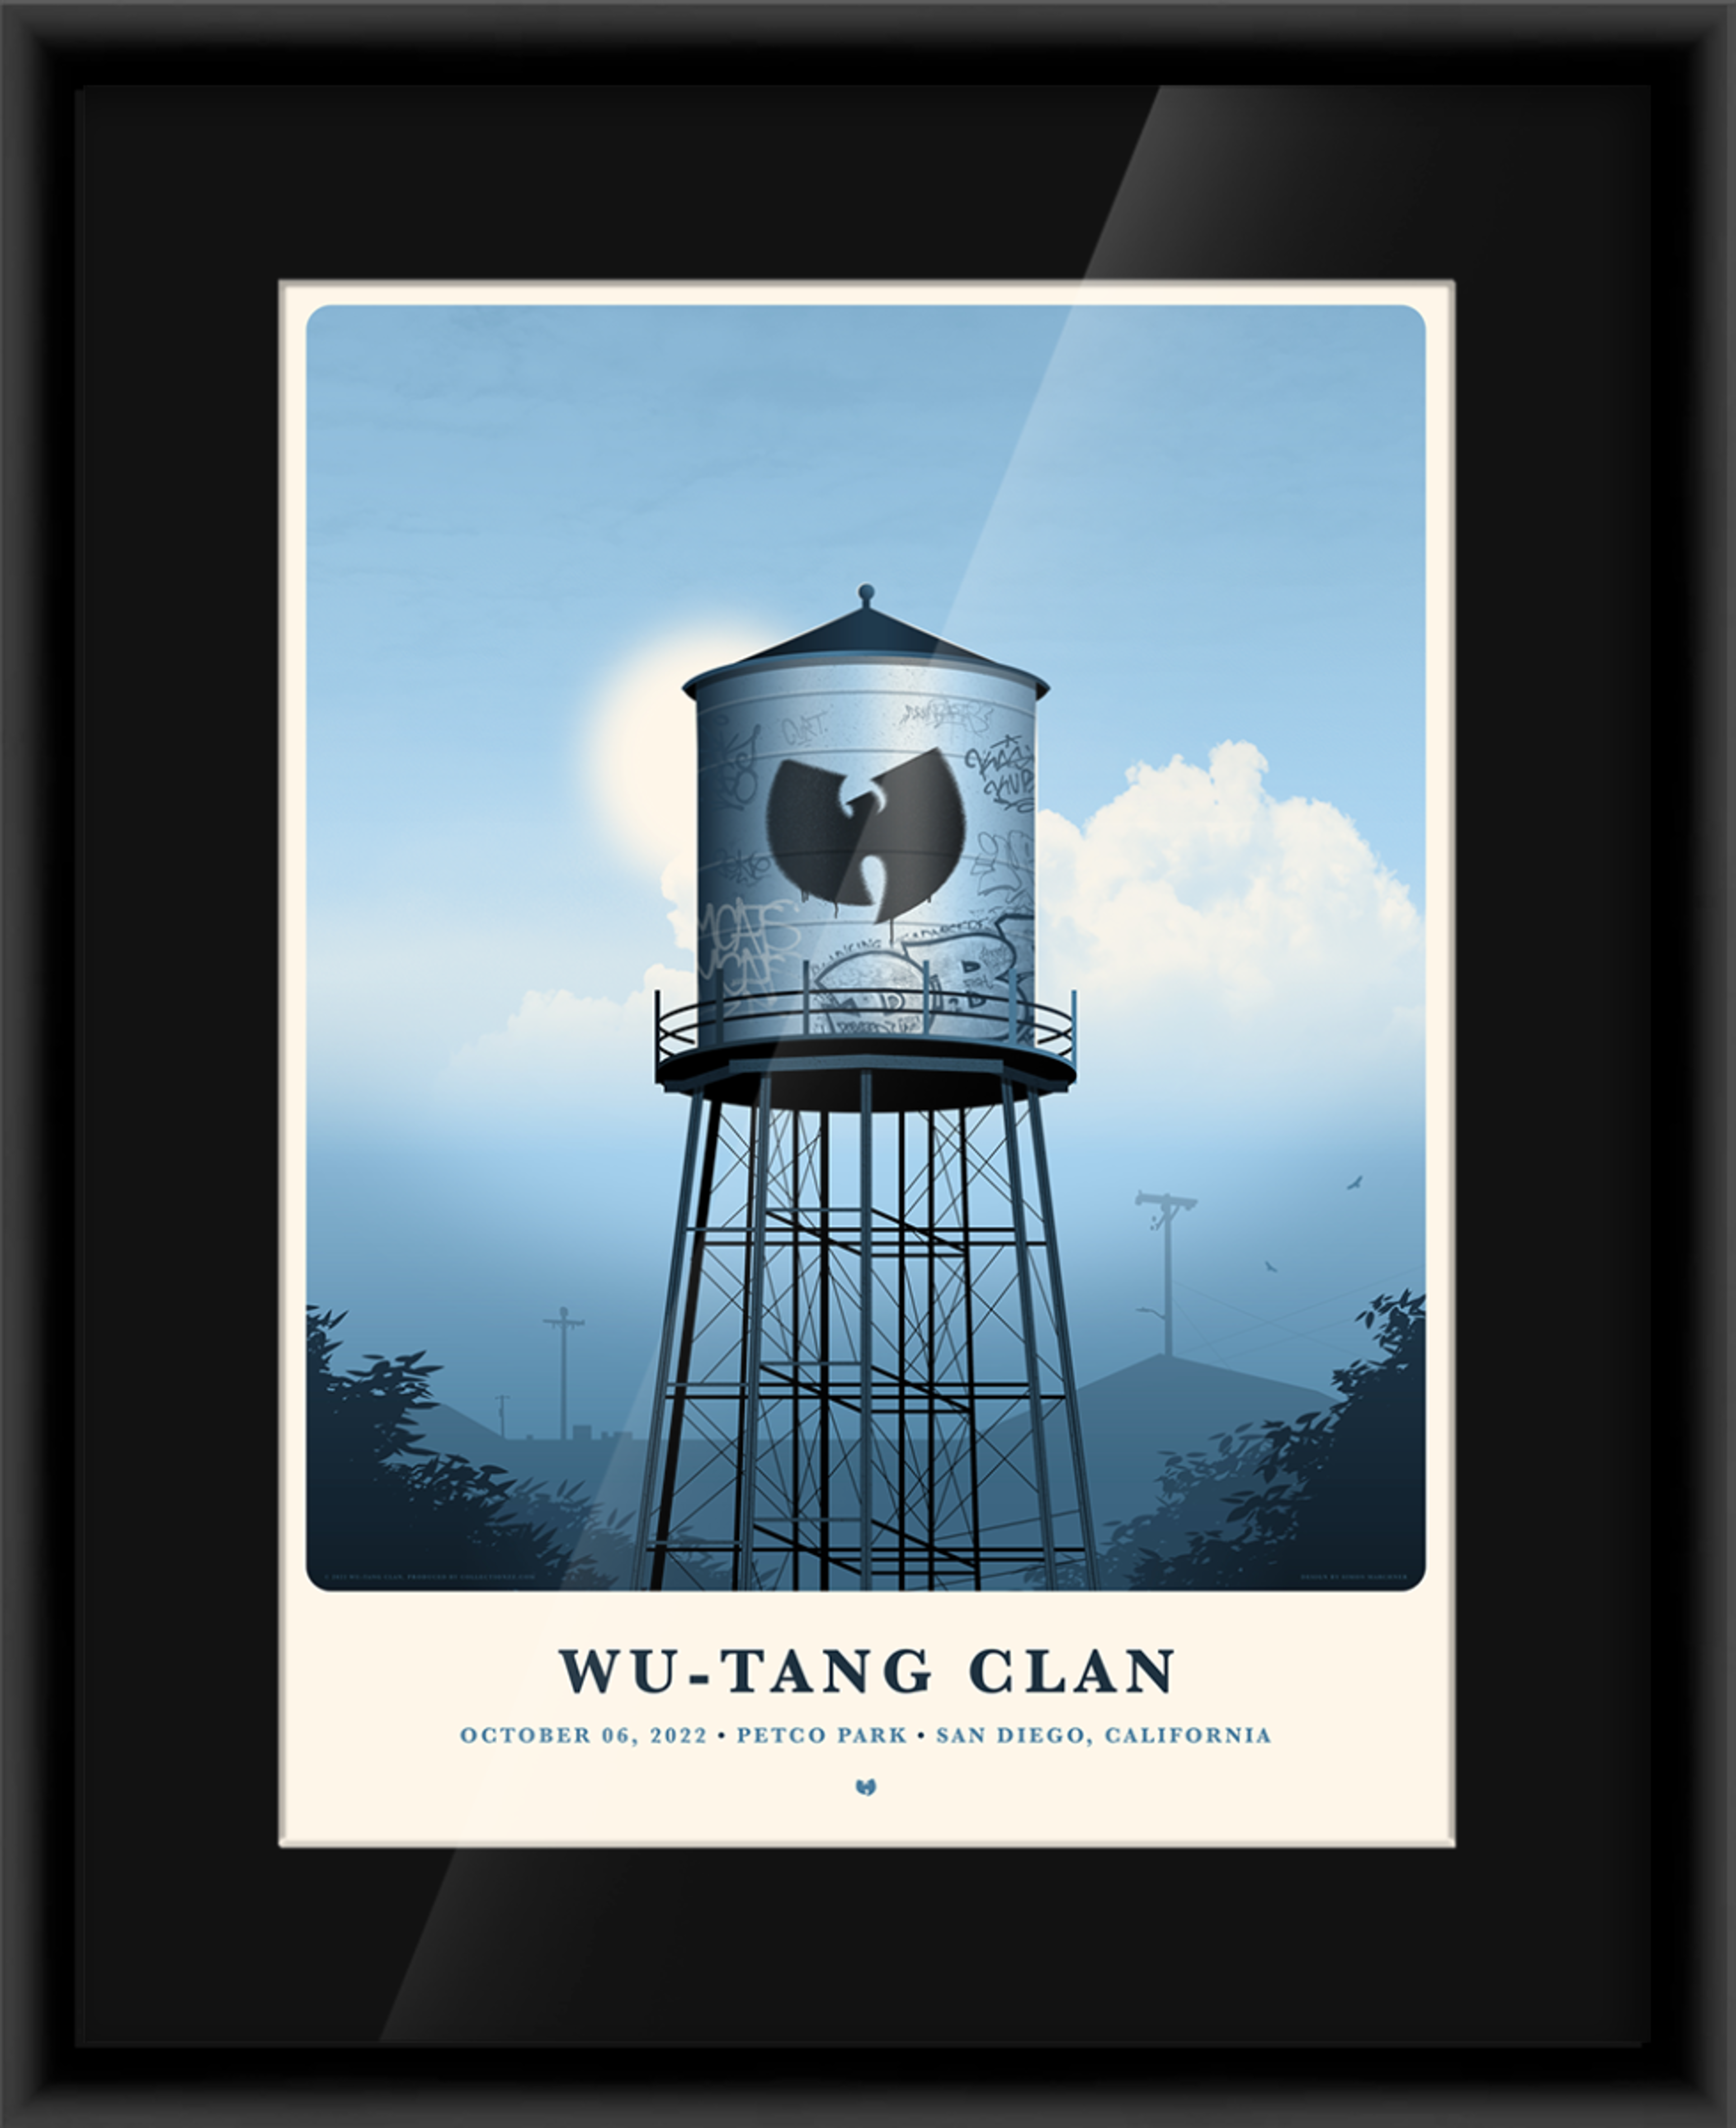 Alternate View 1 of Wu-Tang Clan San Diego October 6, 2022 Print